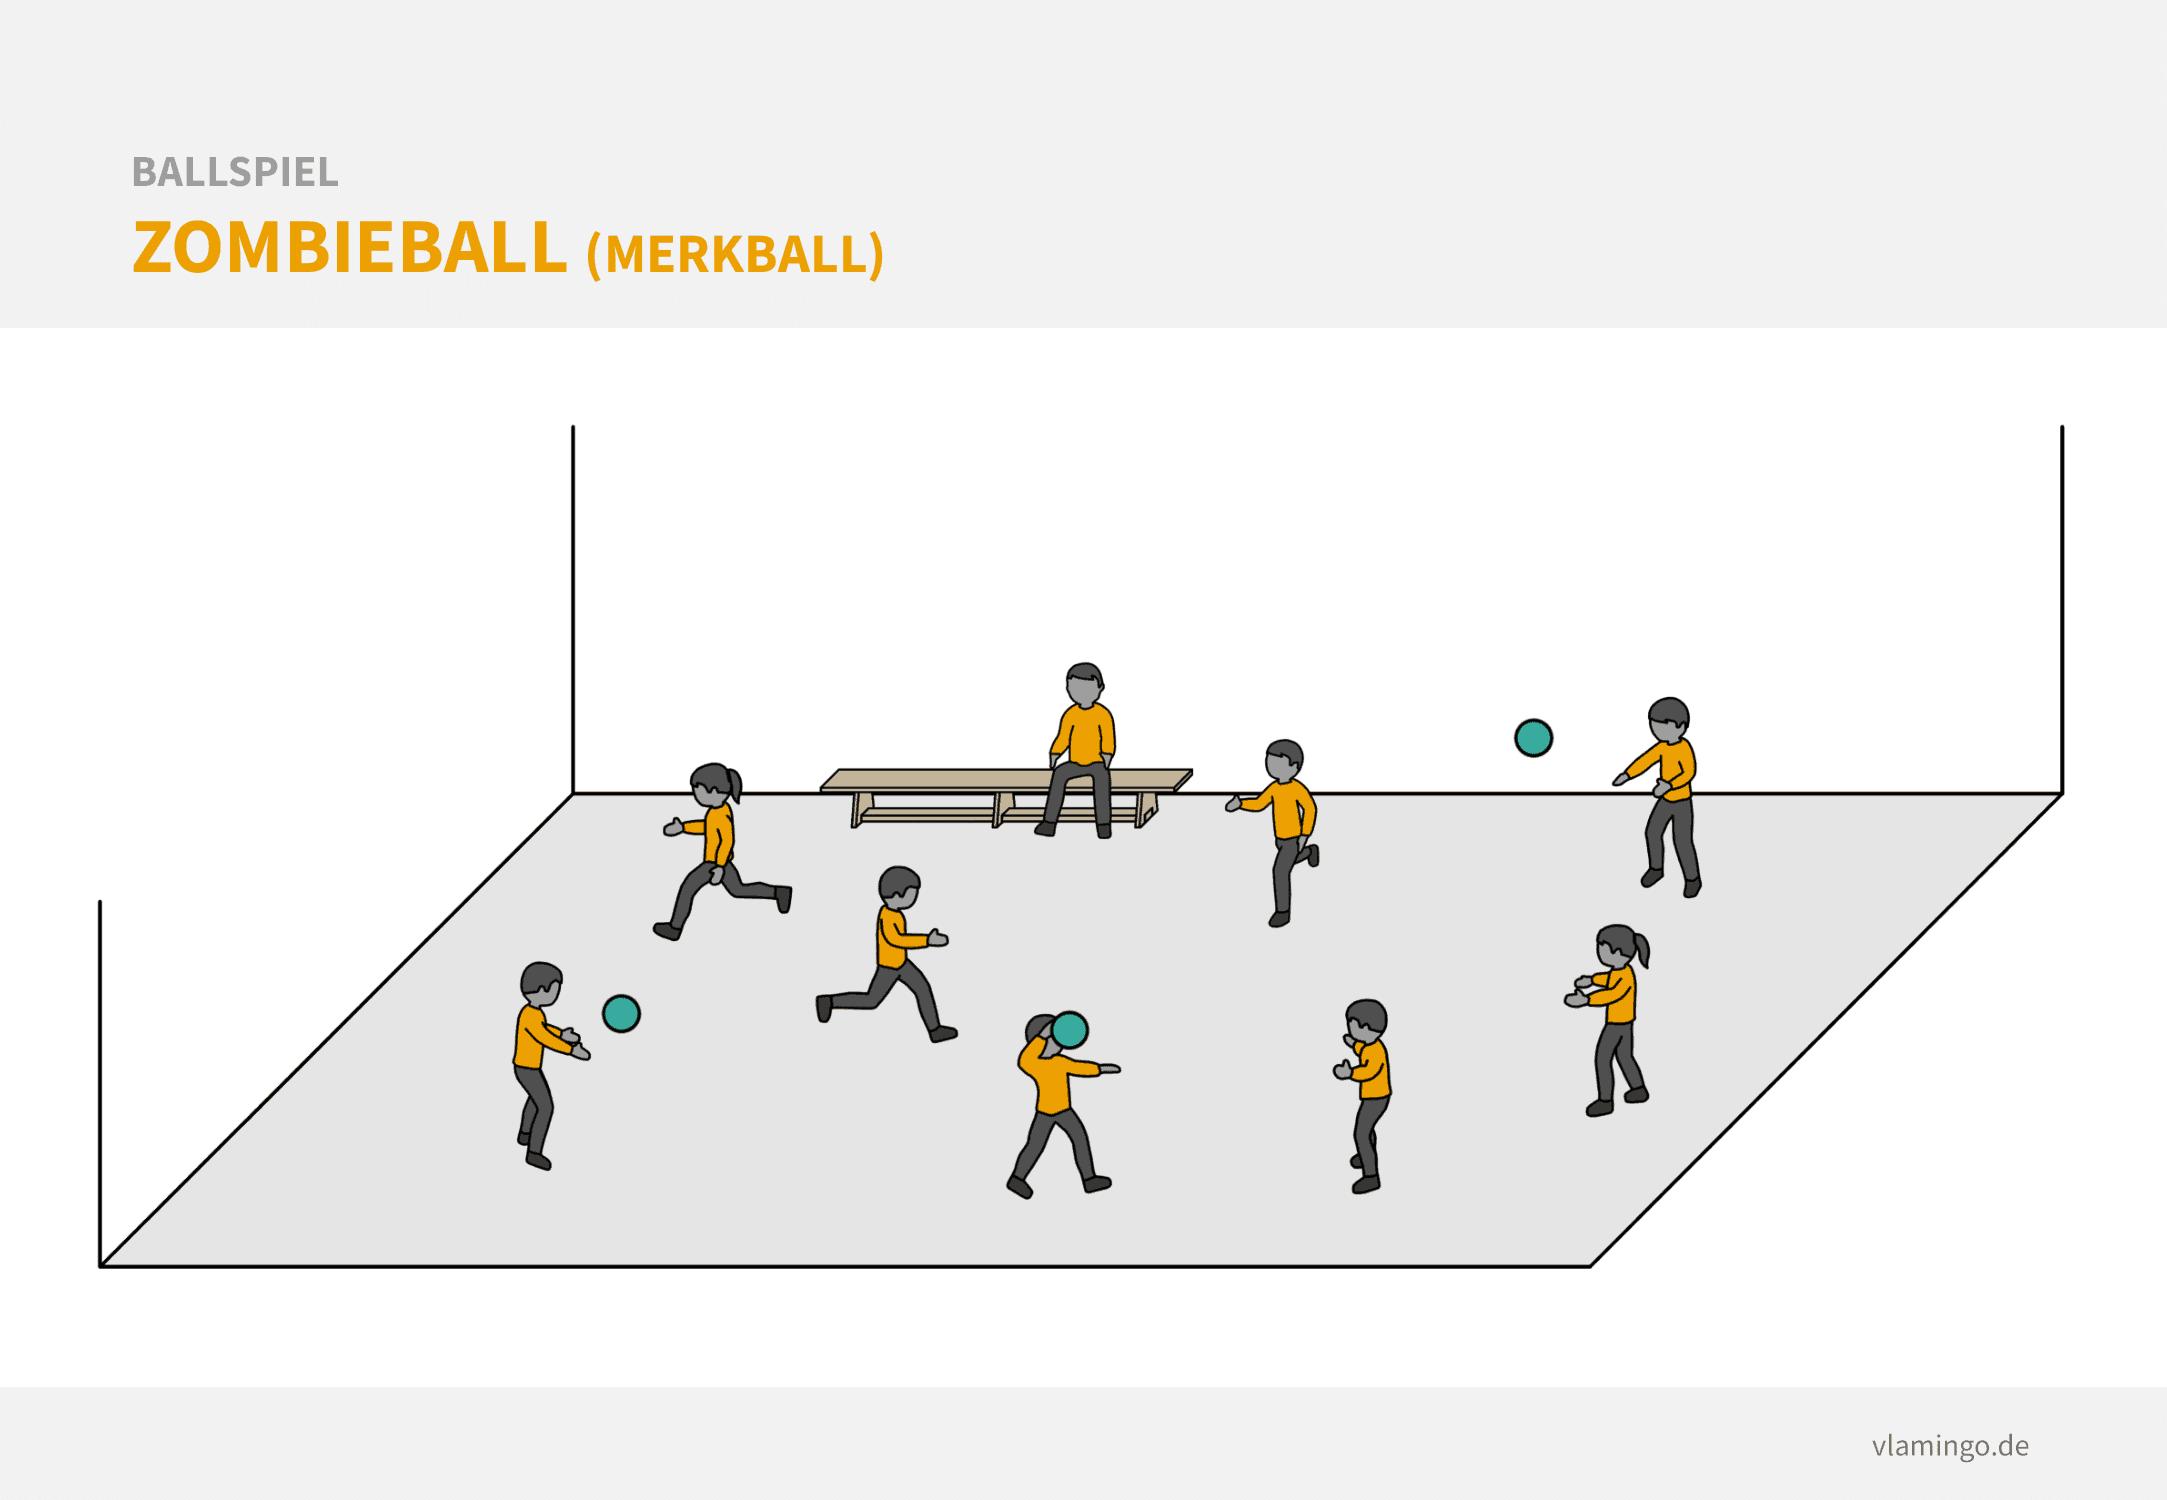 Ballspiel: Zombieball